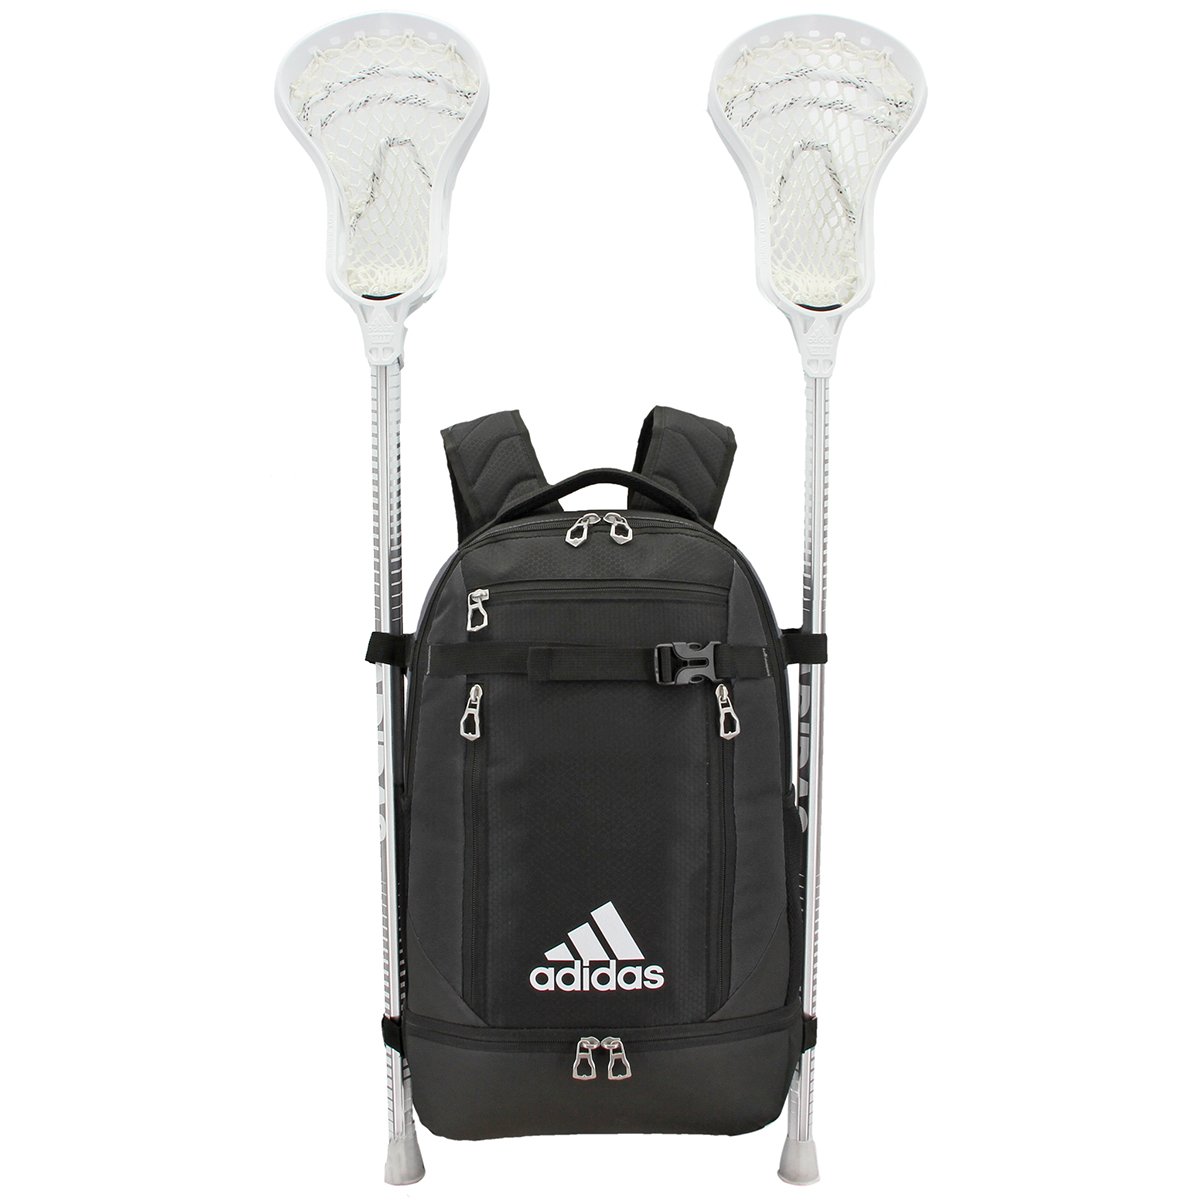 adidas Unisex Utility Team Backpack, Black/Silver, ONE SIZE